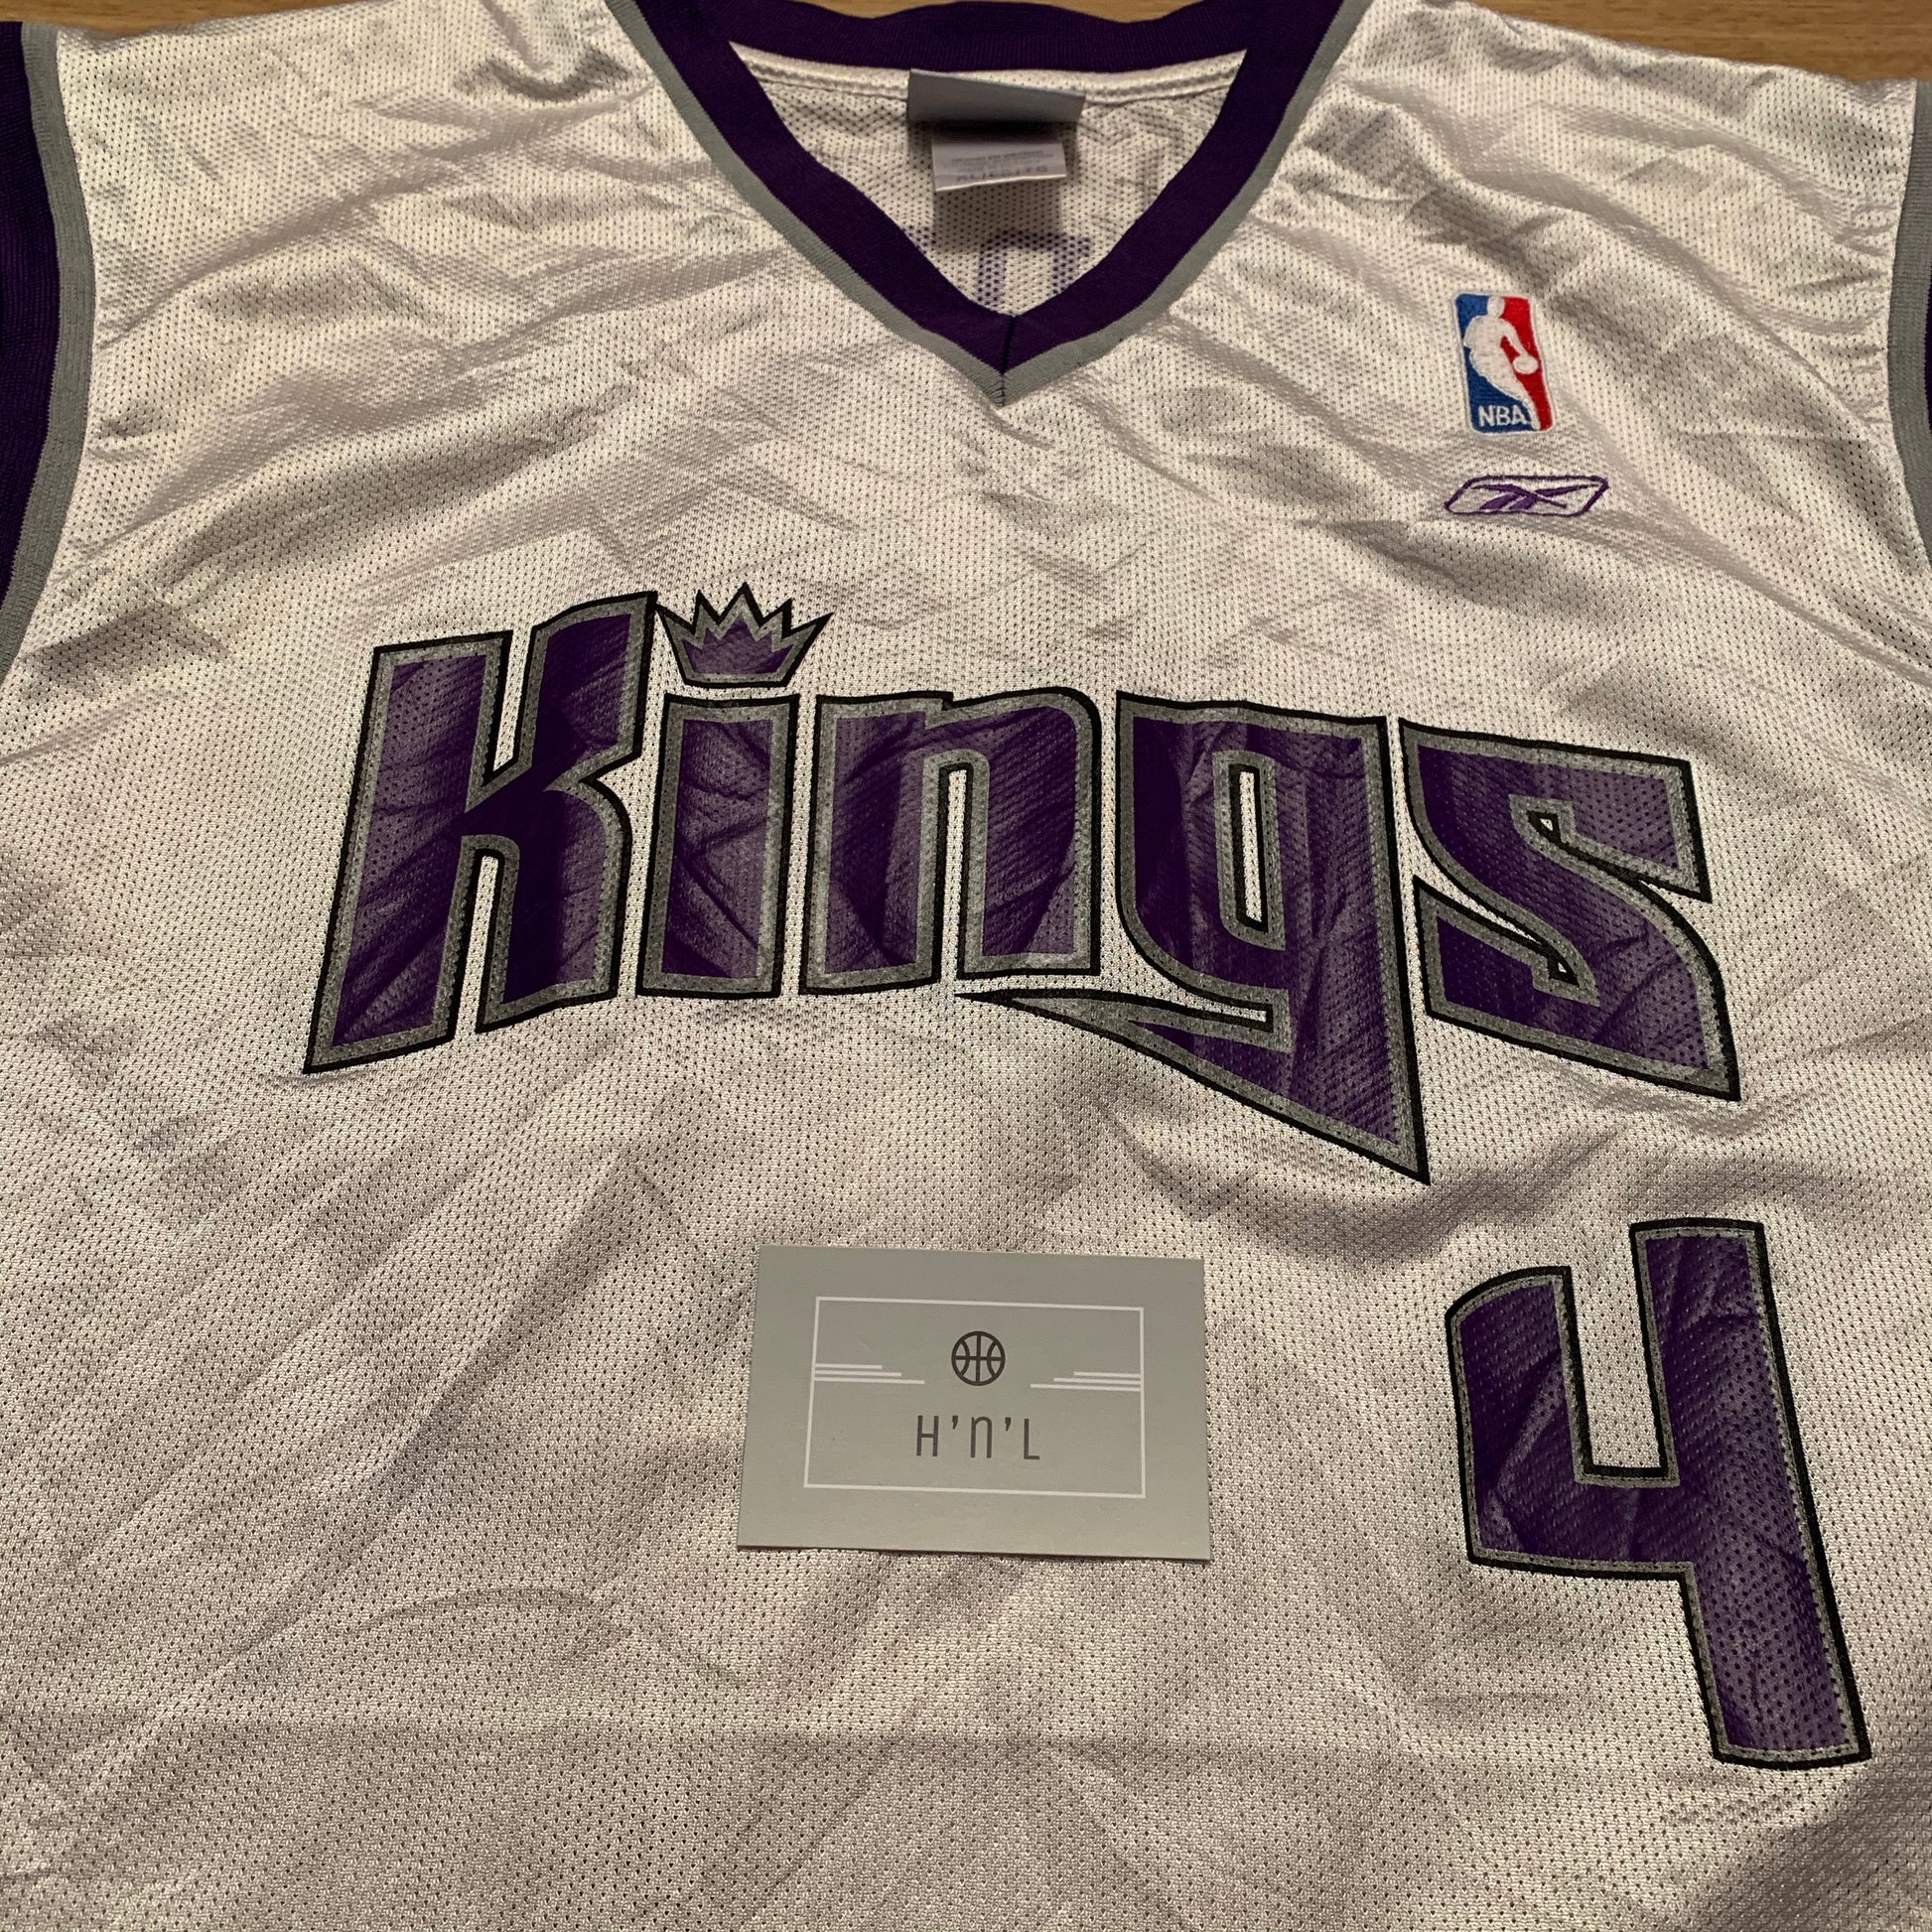 Vintage Chris Webber Sacramento Kings Champion Jersey 90s